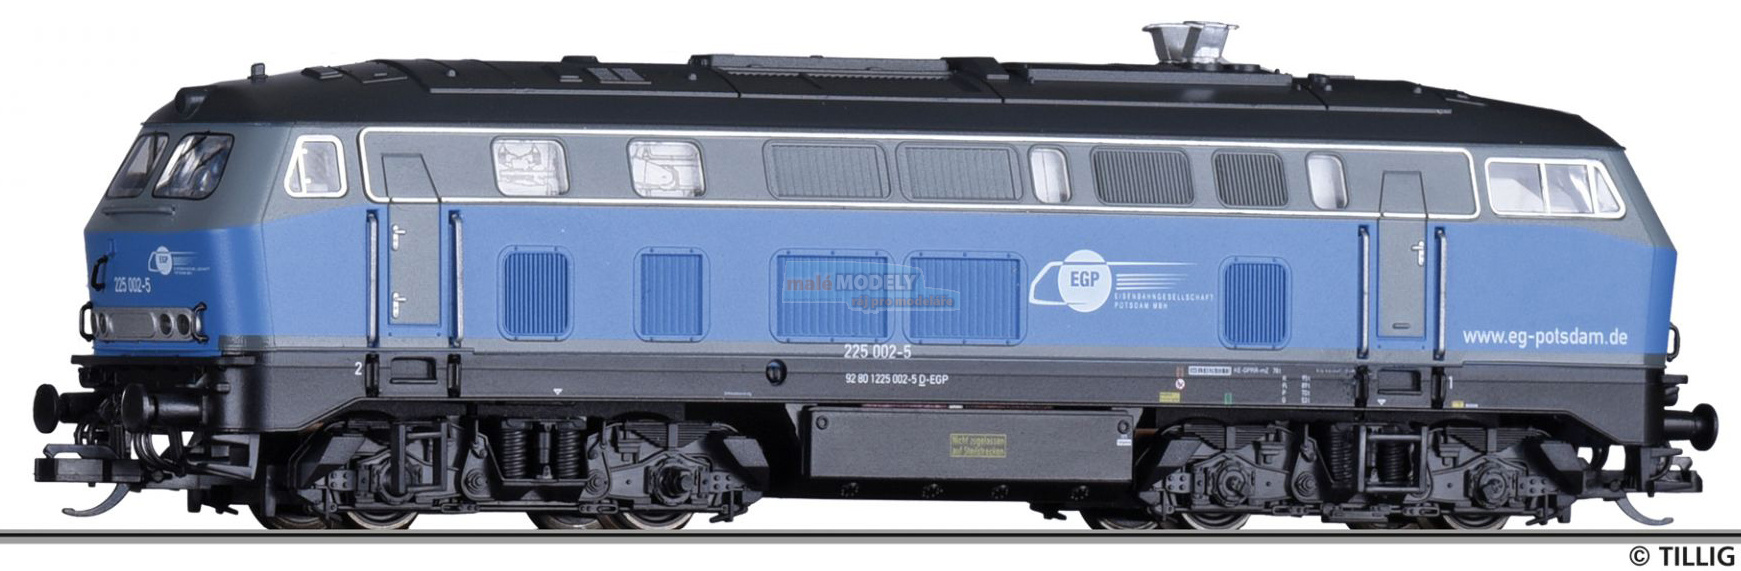 Dieselová lokomotiva 225 002-5, Eisenbahngesellschaft Potsdam mbH